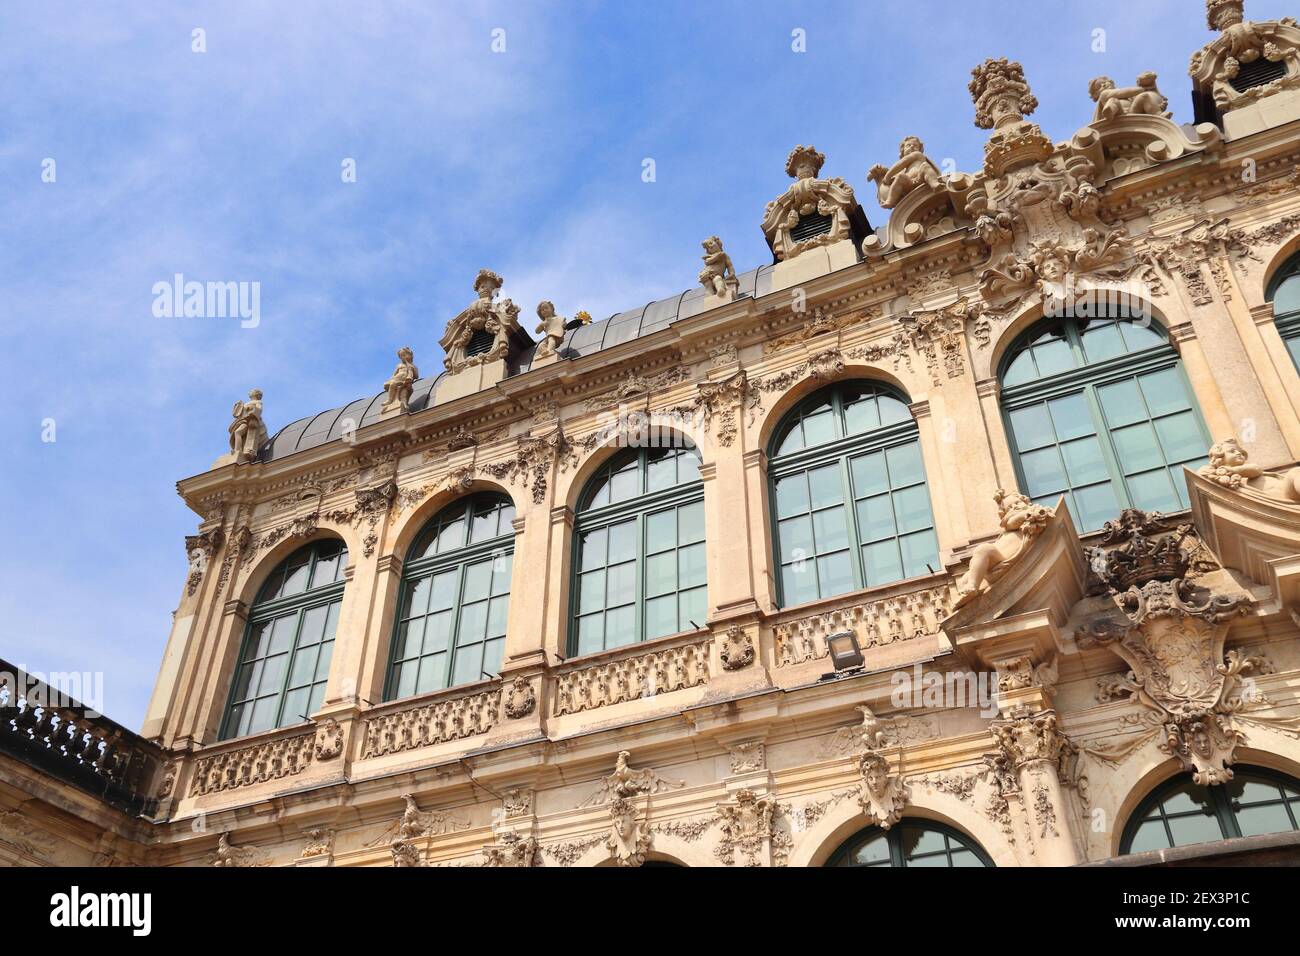 Zwinger Palace in Dresden, Germany. Baroque German landmark. Stock Photo